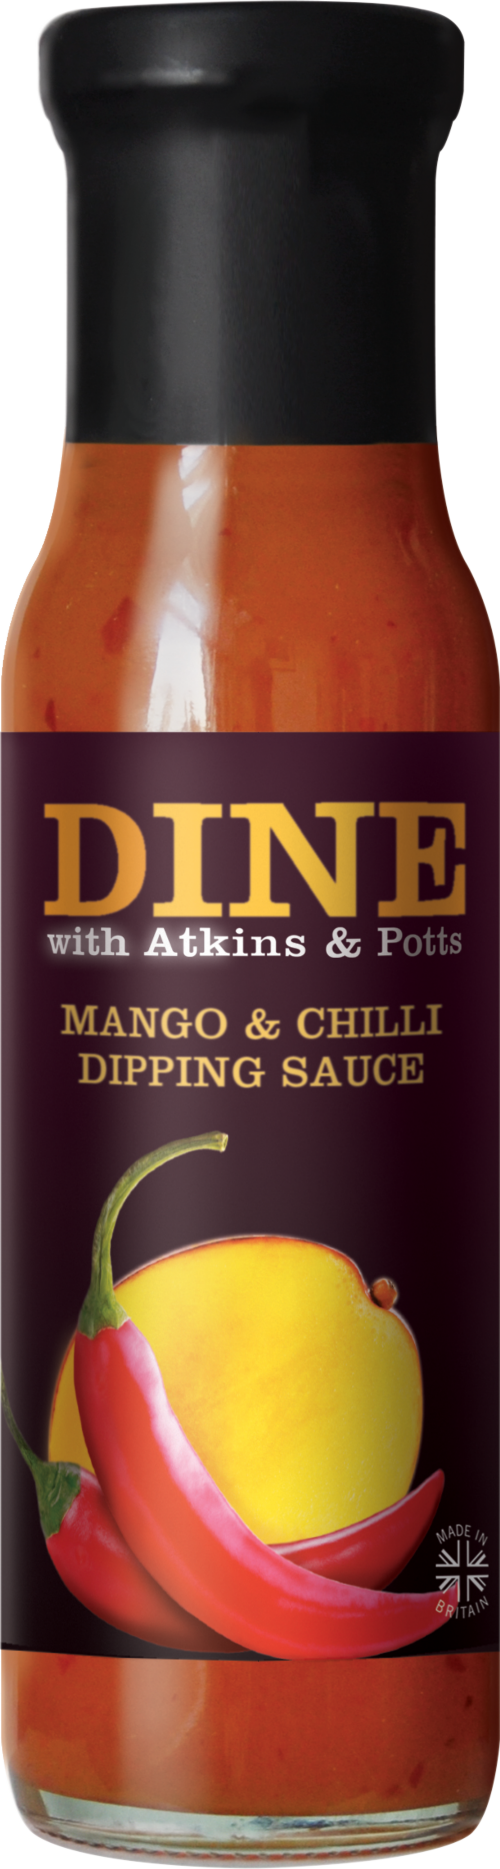 ATKINS & POTTS Mango & Chilli Dipping Sauce 260g